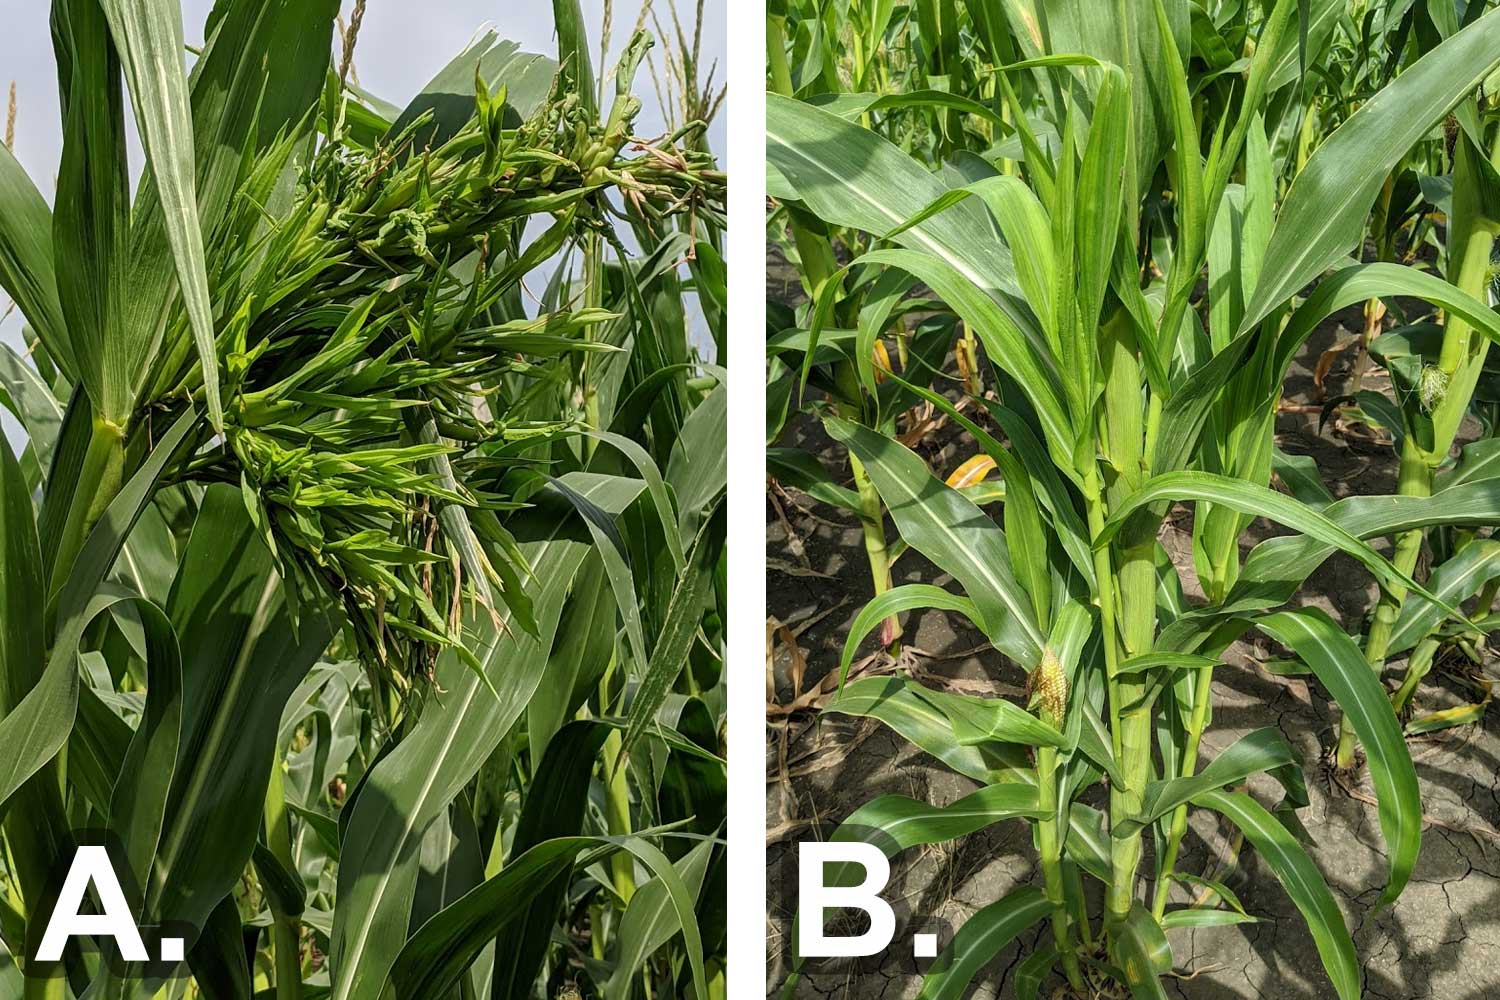 Left: Green corn plant with abnormal tassel growth. Right: Green corn plant with abnormal tiller growth.